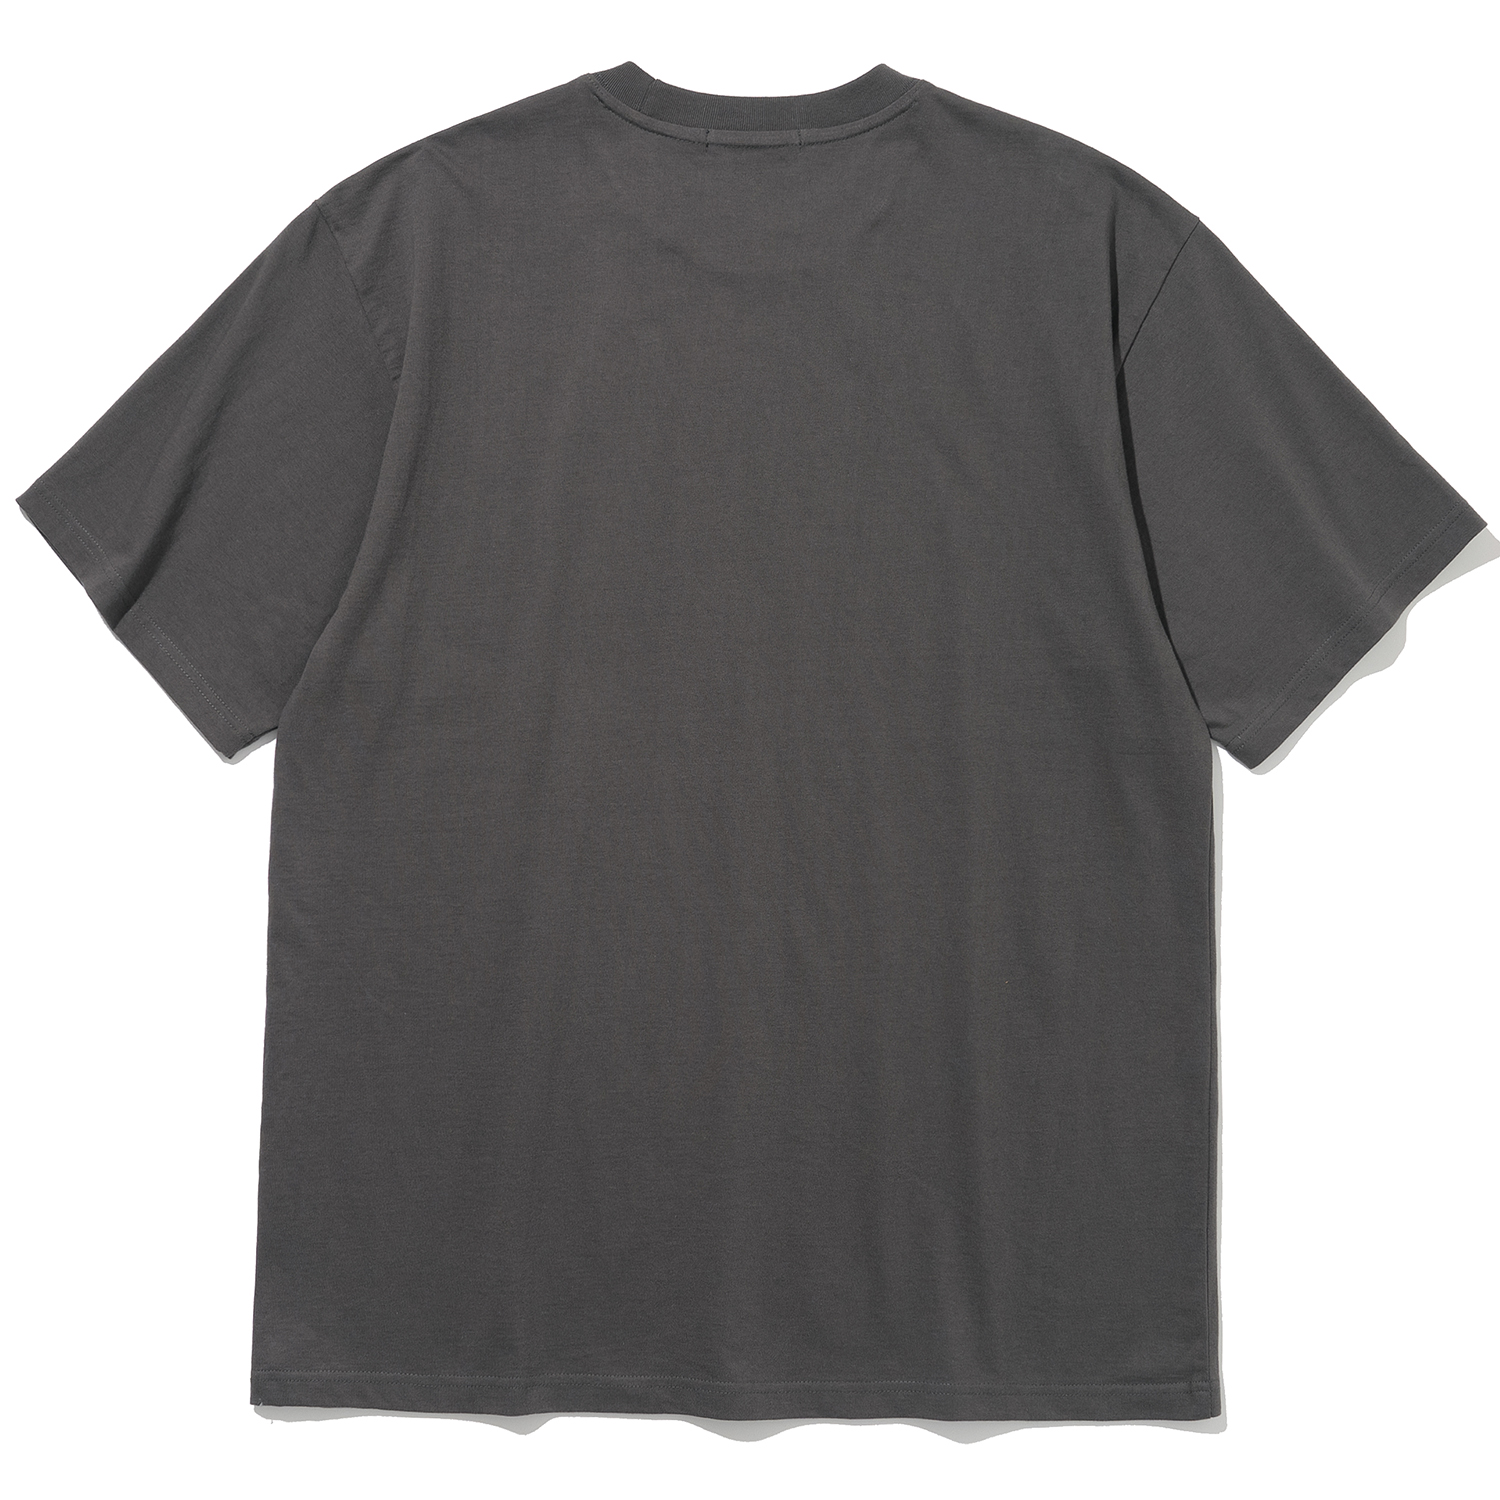 Pick up T-Shirts - Dark Grey,NOT4NERD